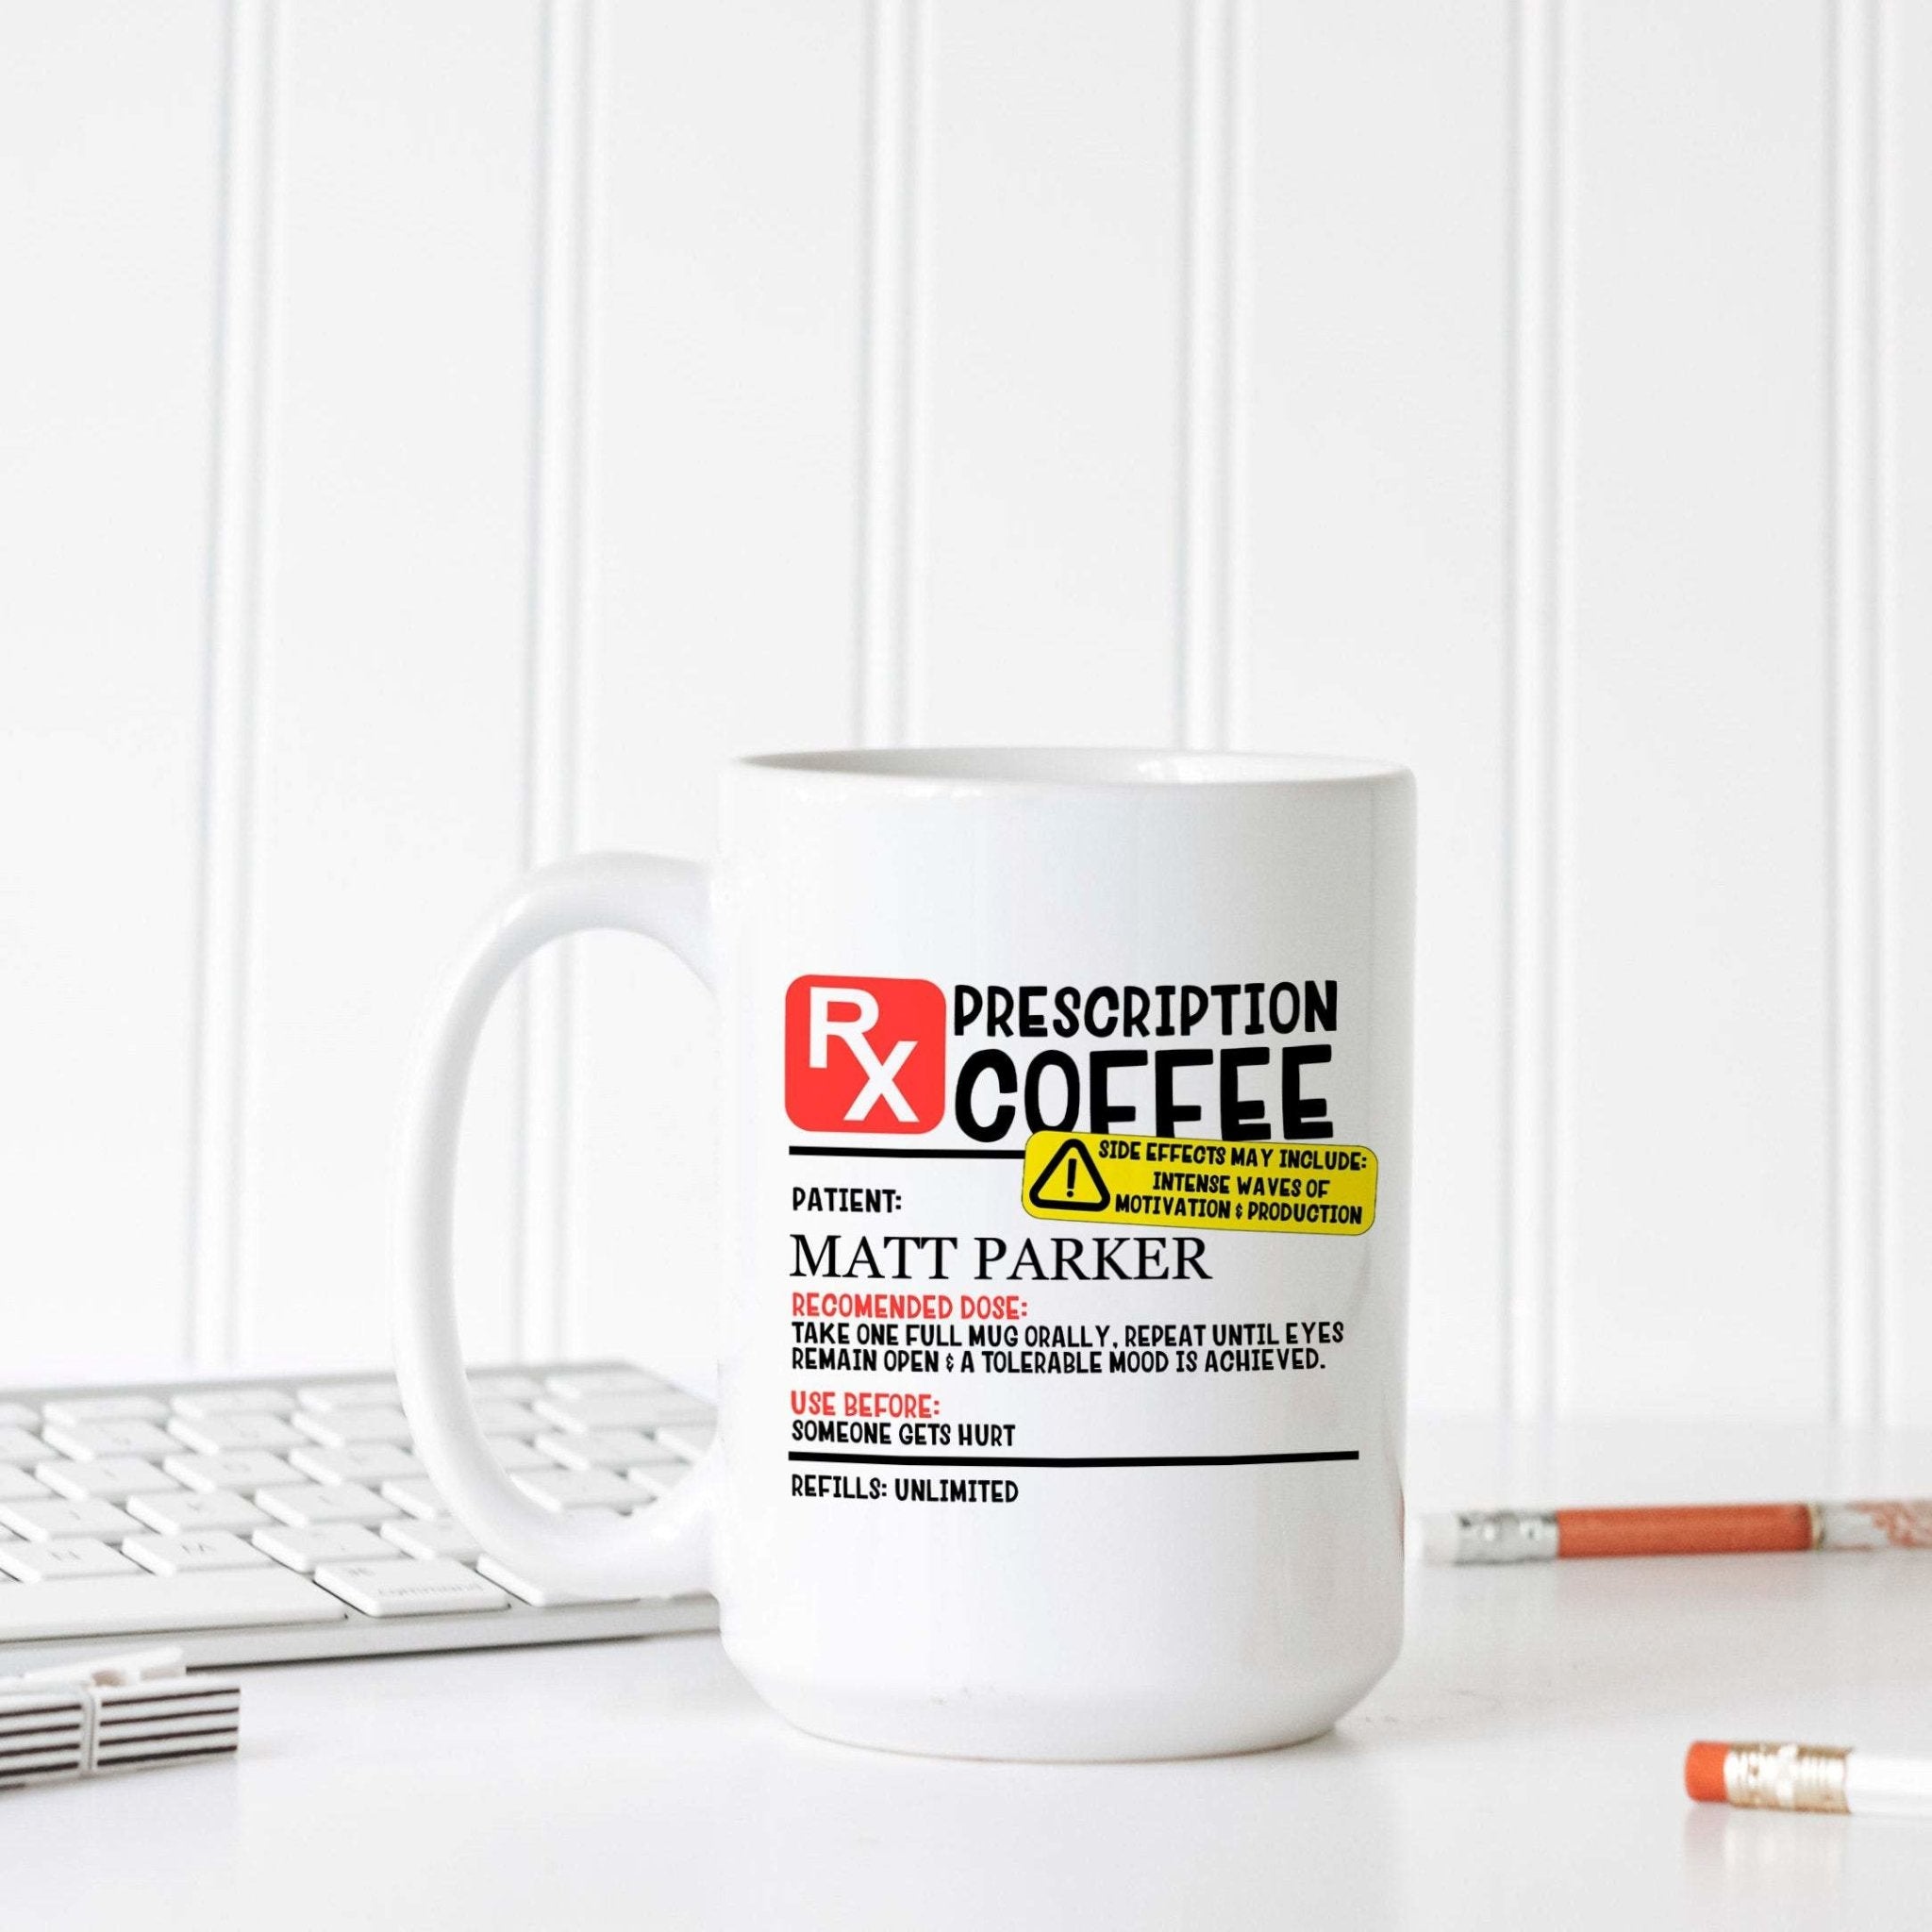 Personalized Mug Personalized Coffee Mug for Men Personalized Gift